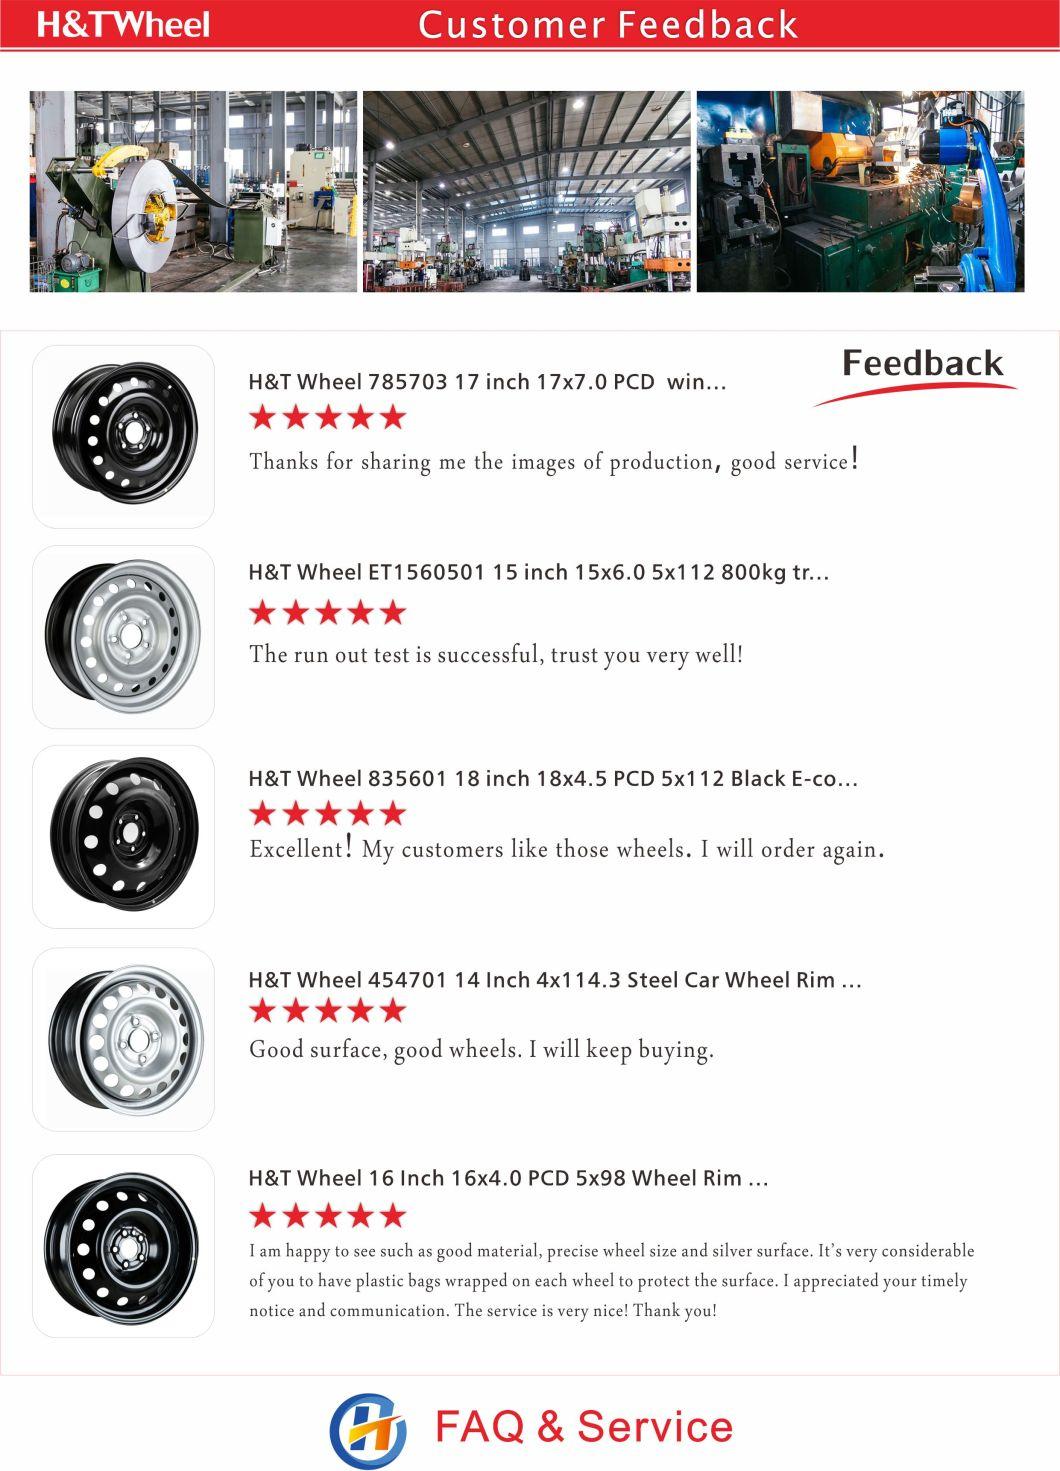 H&T Wheel 554701 15 Inch 15X5.5 4X1143 Black or Silver Tested Steel Wheels Rims